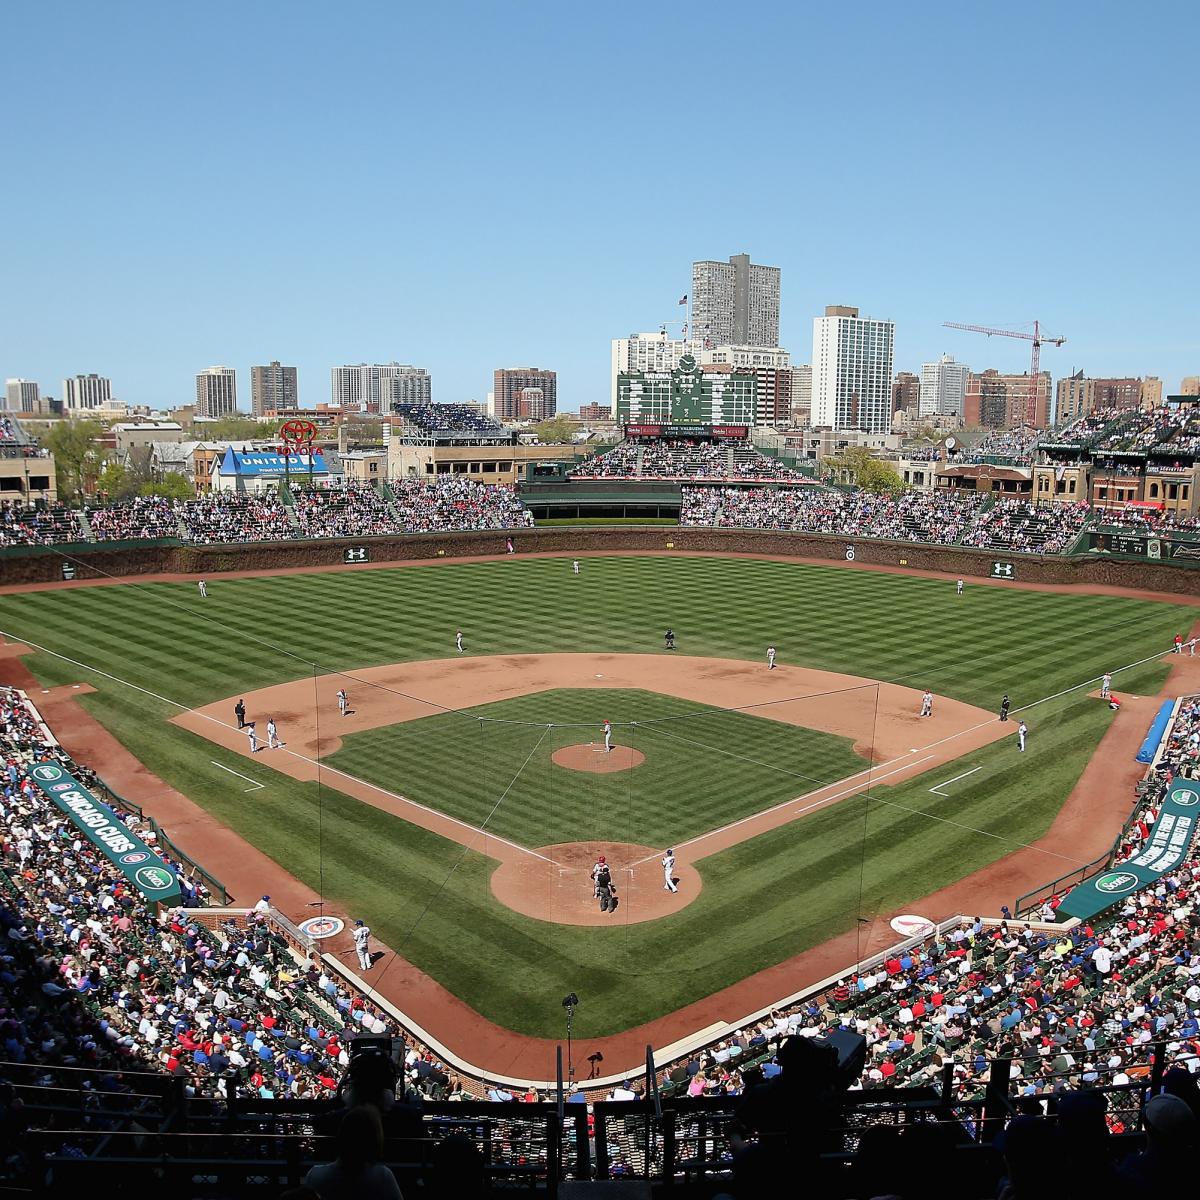 Baseball fans need to visit Chicago's Wrigley Field stadium